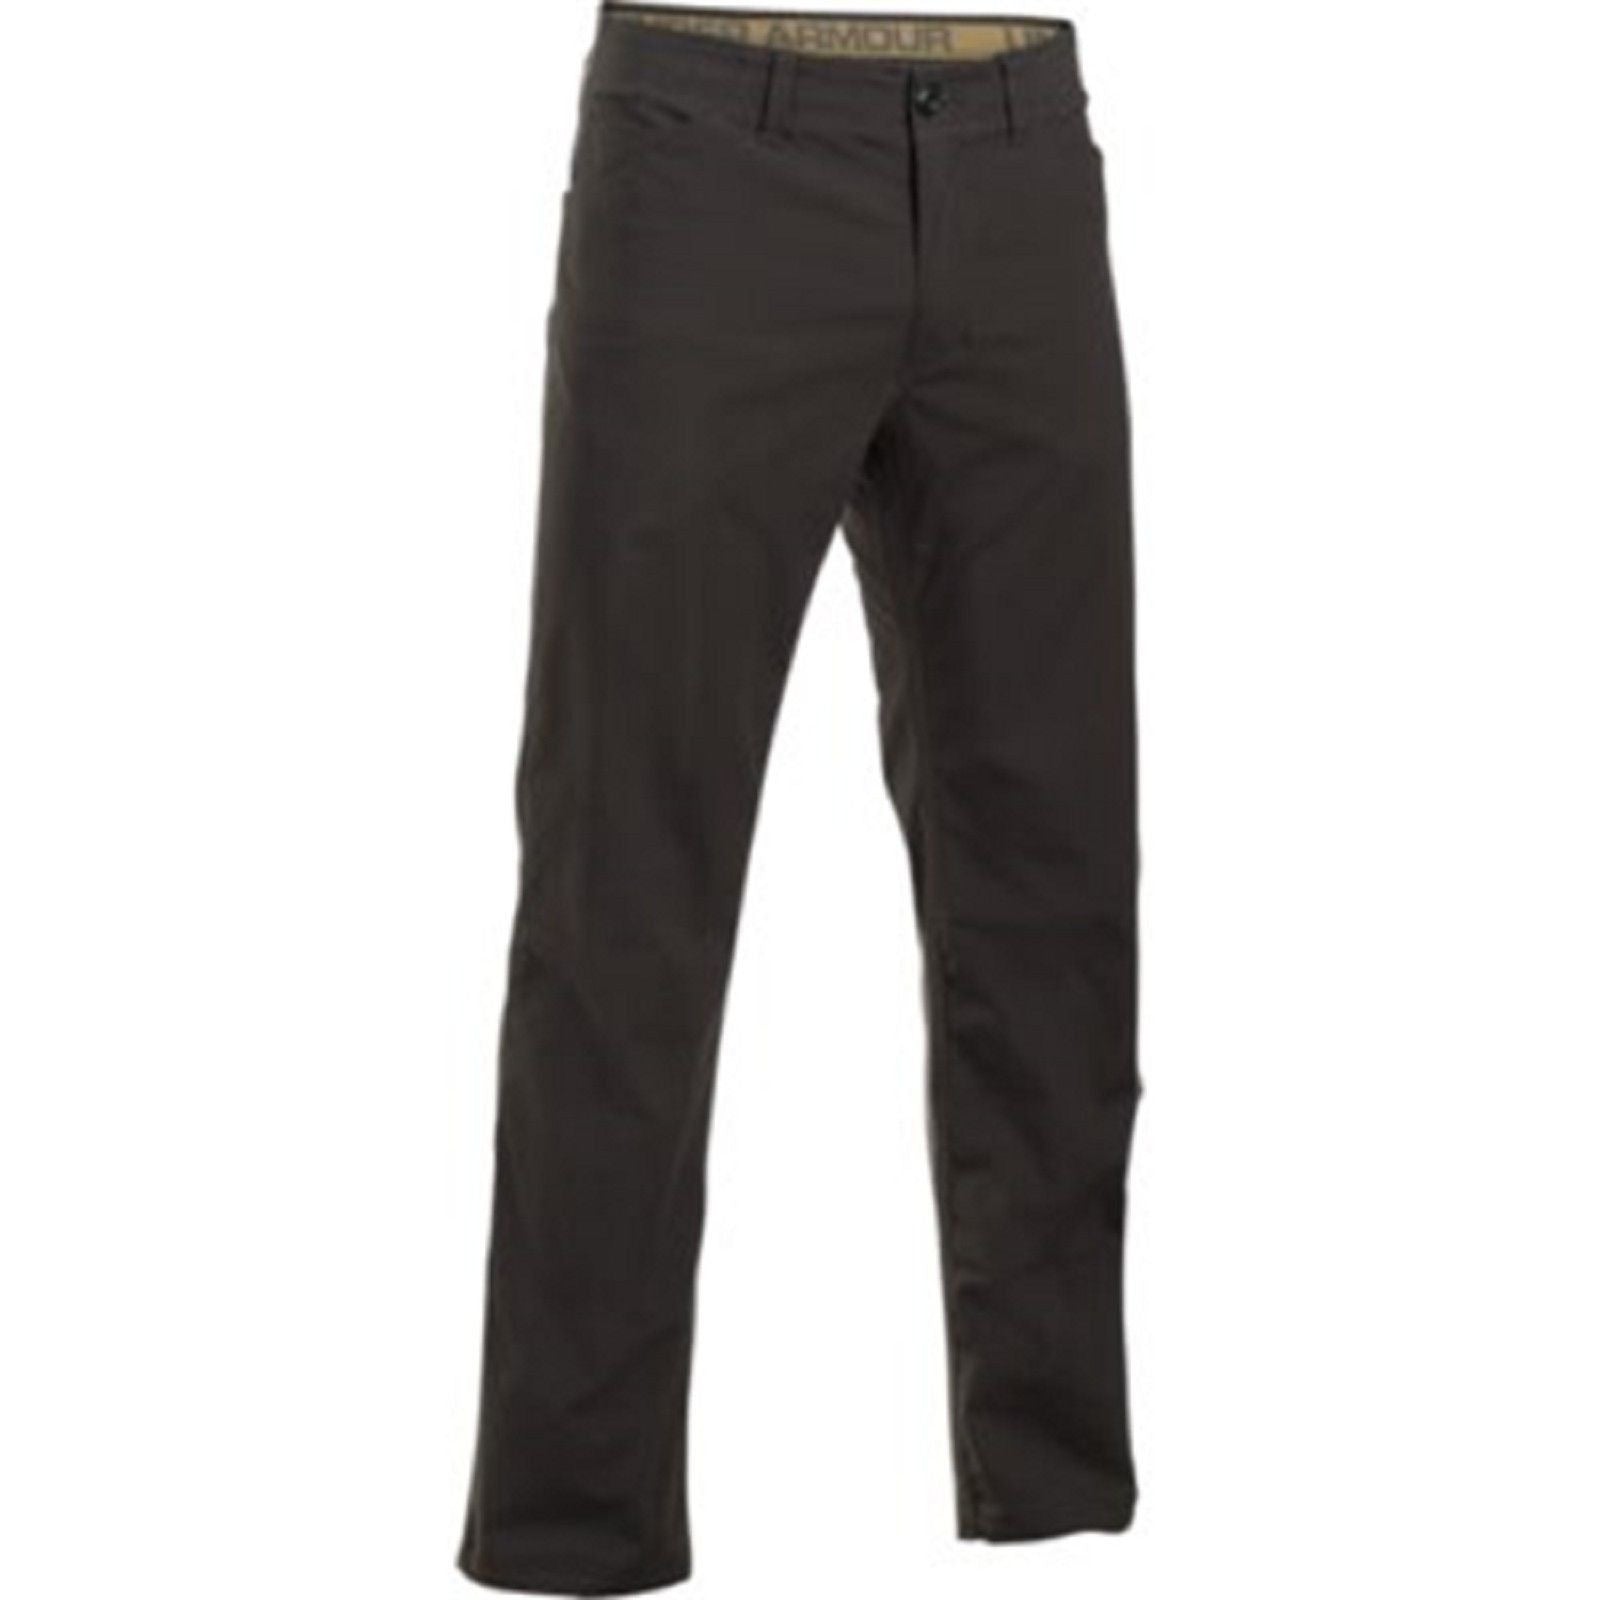 UNDER ARMOUR STORM Men's 36 Sand Covert Tactical Pants Trousers Stretch  36x30 $29.95 - PicClick